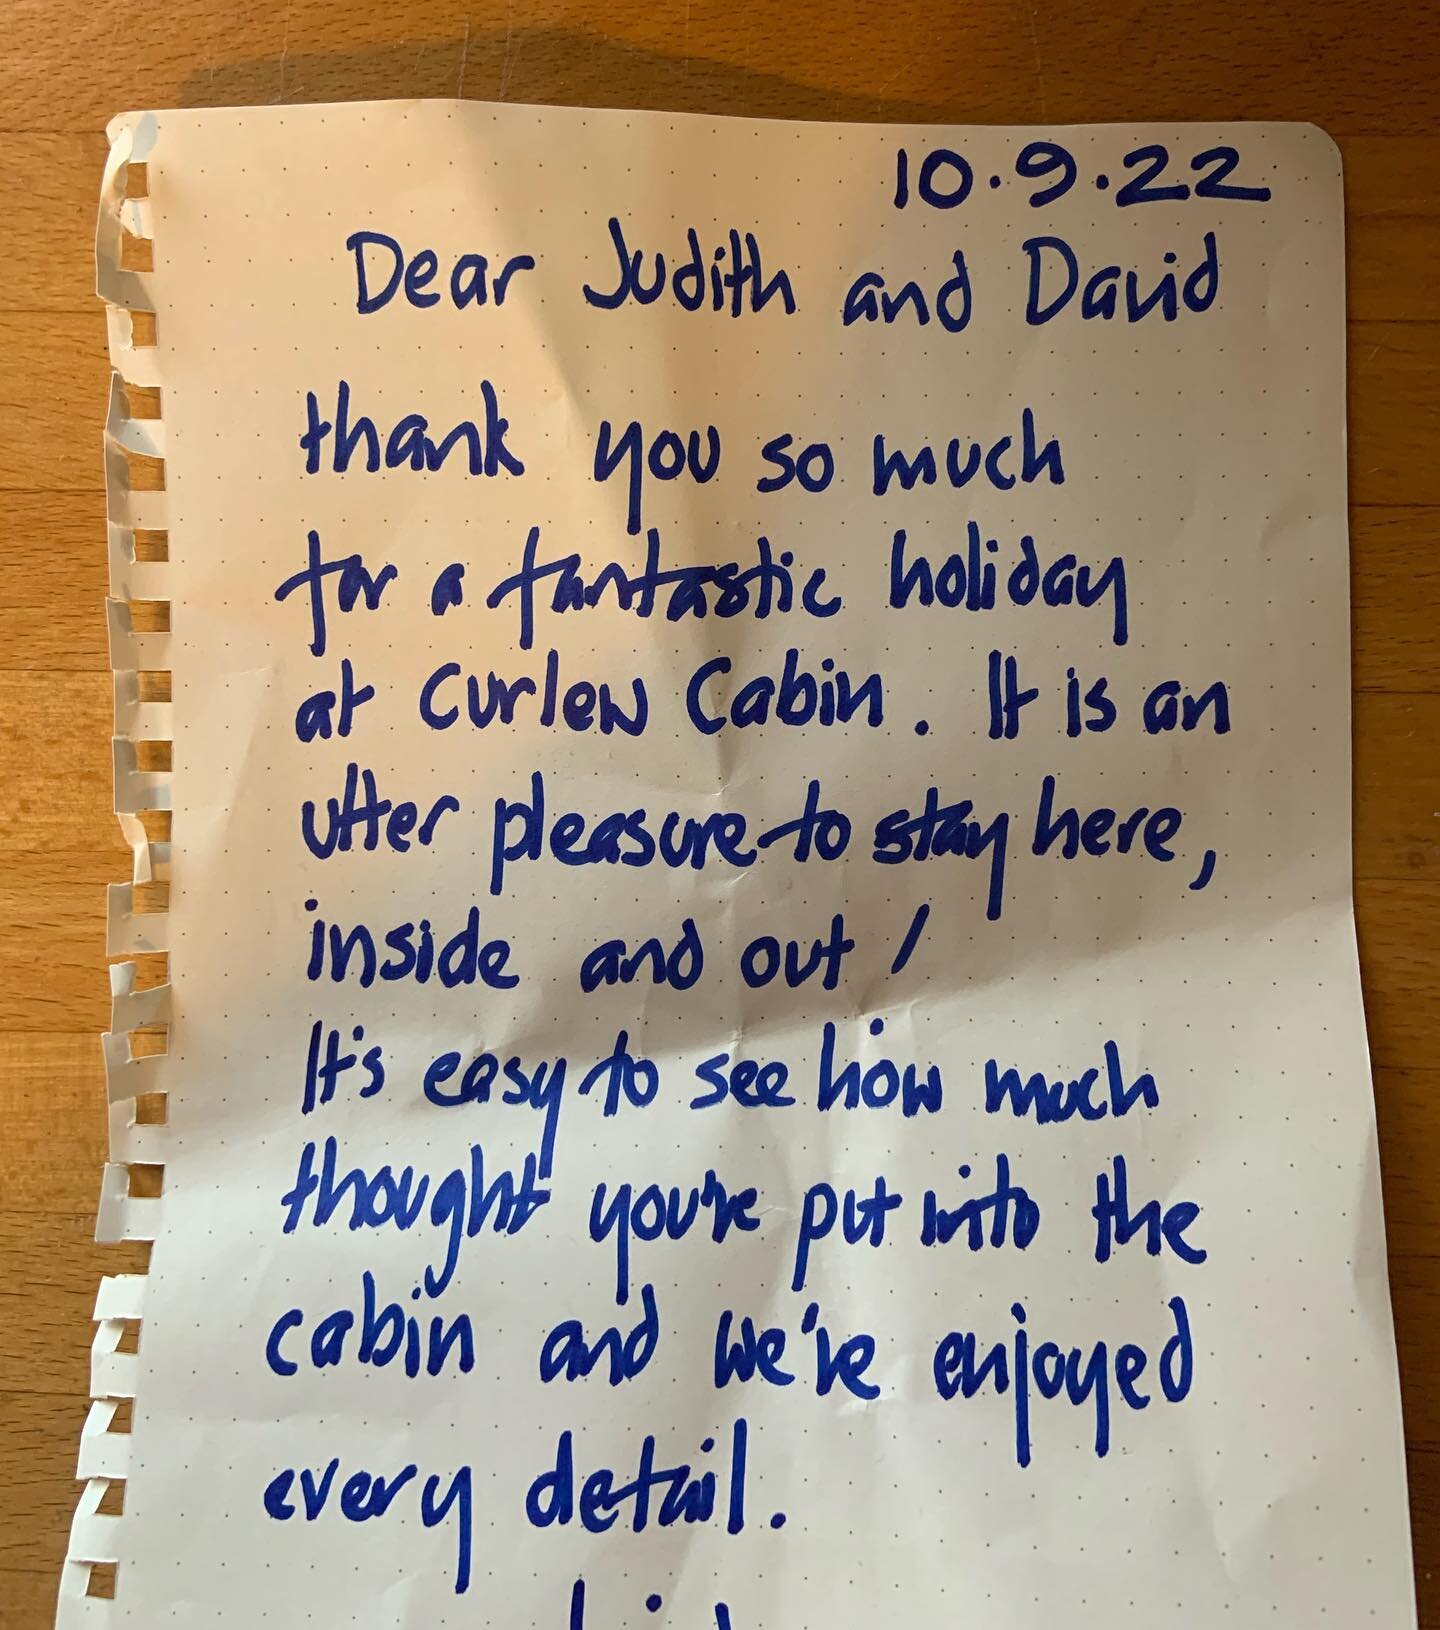 A lovely note from some recent guests, come again soon!
.
.
.
.
#curlewcabin #visitscotland #belhavenbay #cabinlife #holidaysinscotland #beach #scotlandscoast #eastlothian #visiteastlothian #johnmuirtrust #dunbar #lovescotland